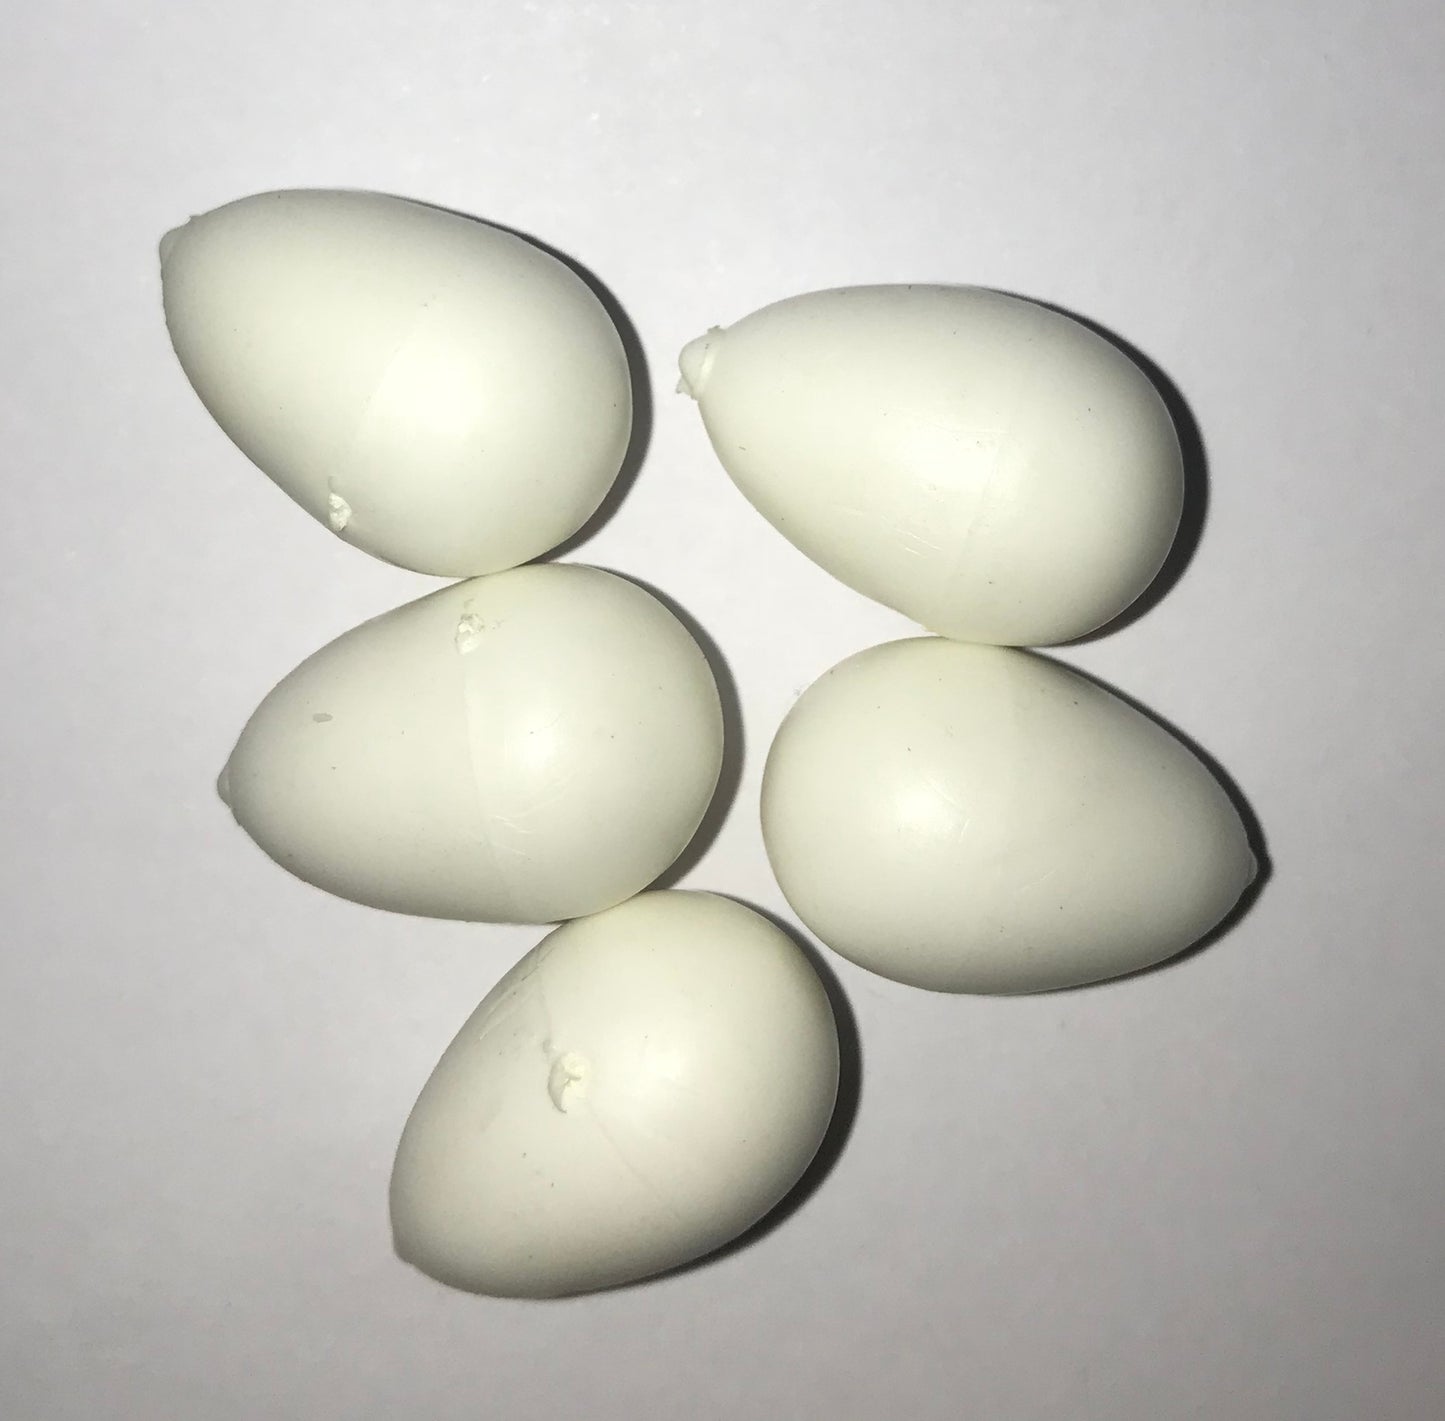 Plastic Dummy Finch Eggs (5 Pack)